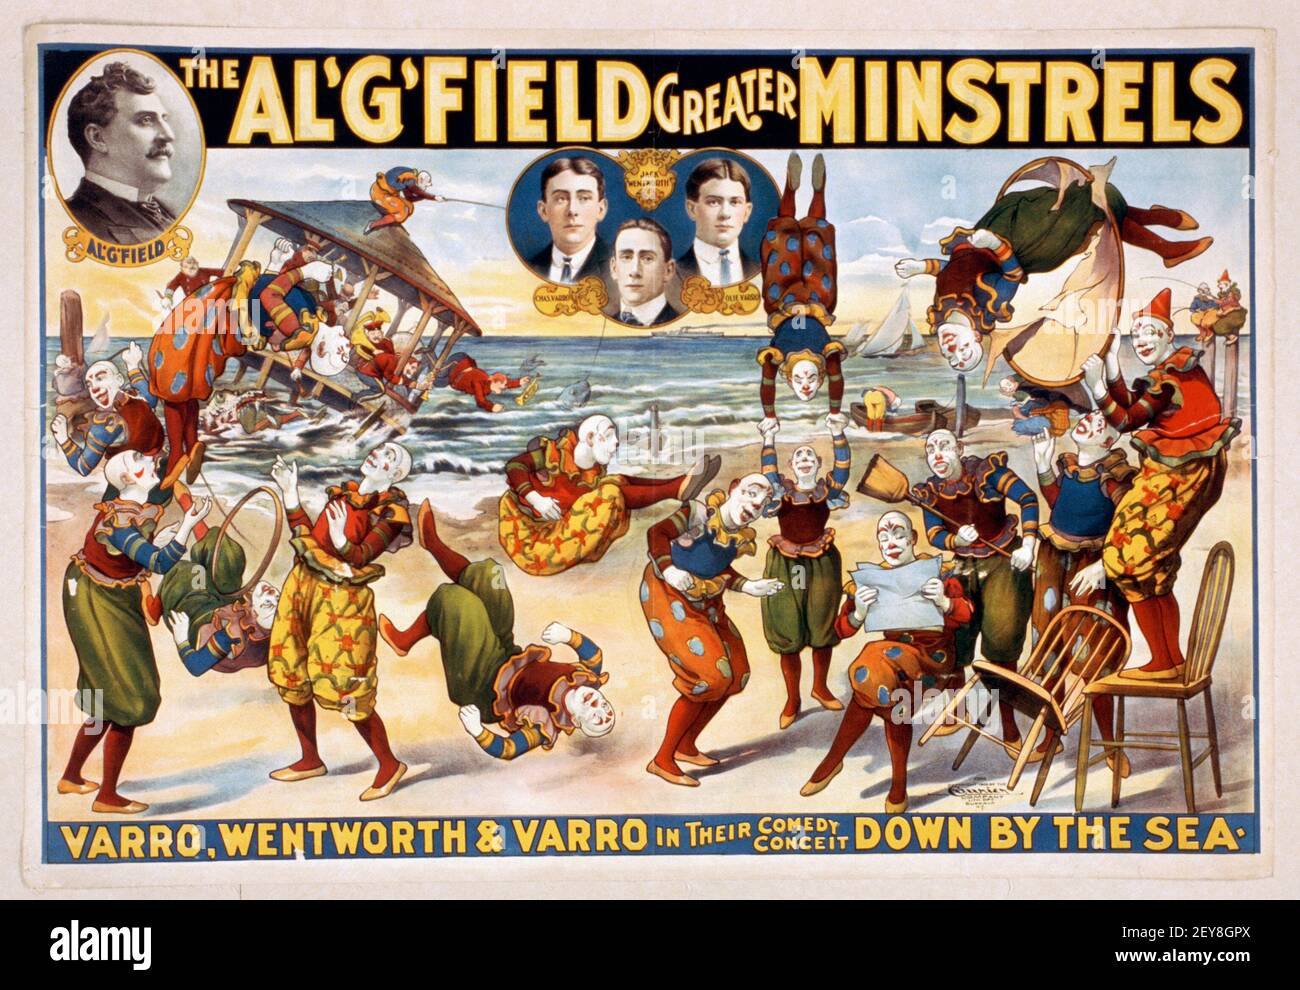 Die Al'g'field Greater Minstrels. Classic Circus Poster feat Clowns. Varro, Wentworth & Carro in ihrem Comedy-Eingebilde Down by the Sea. Stockfoto